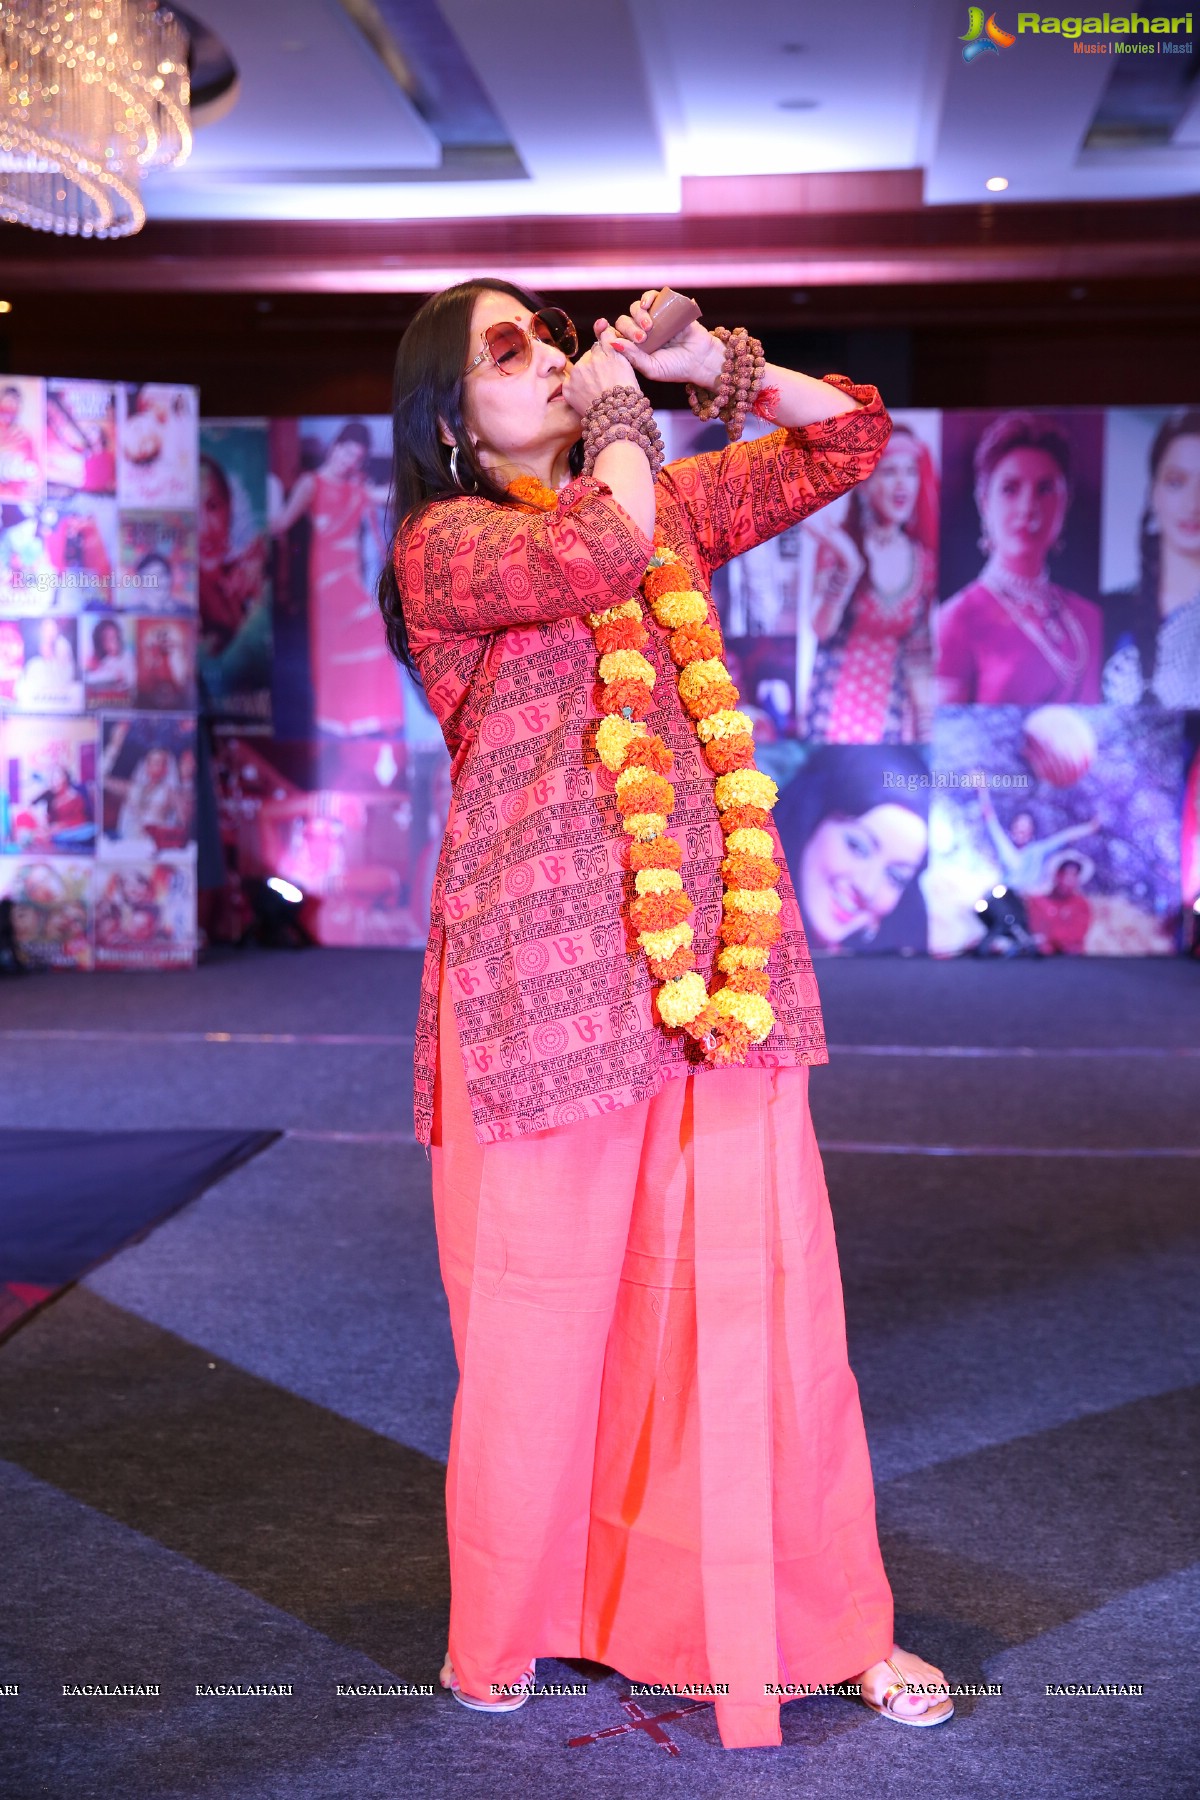 Bollywood Themed Sanskruti Annual Meeting @ Taj Vivanta, Begumpet